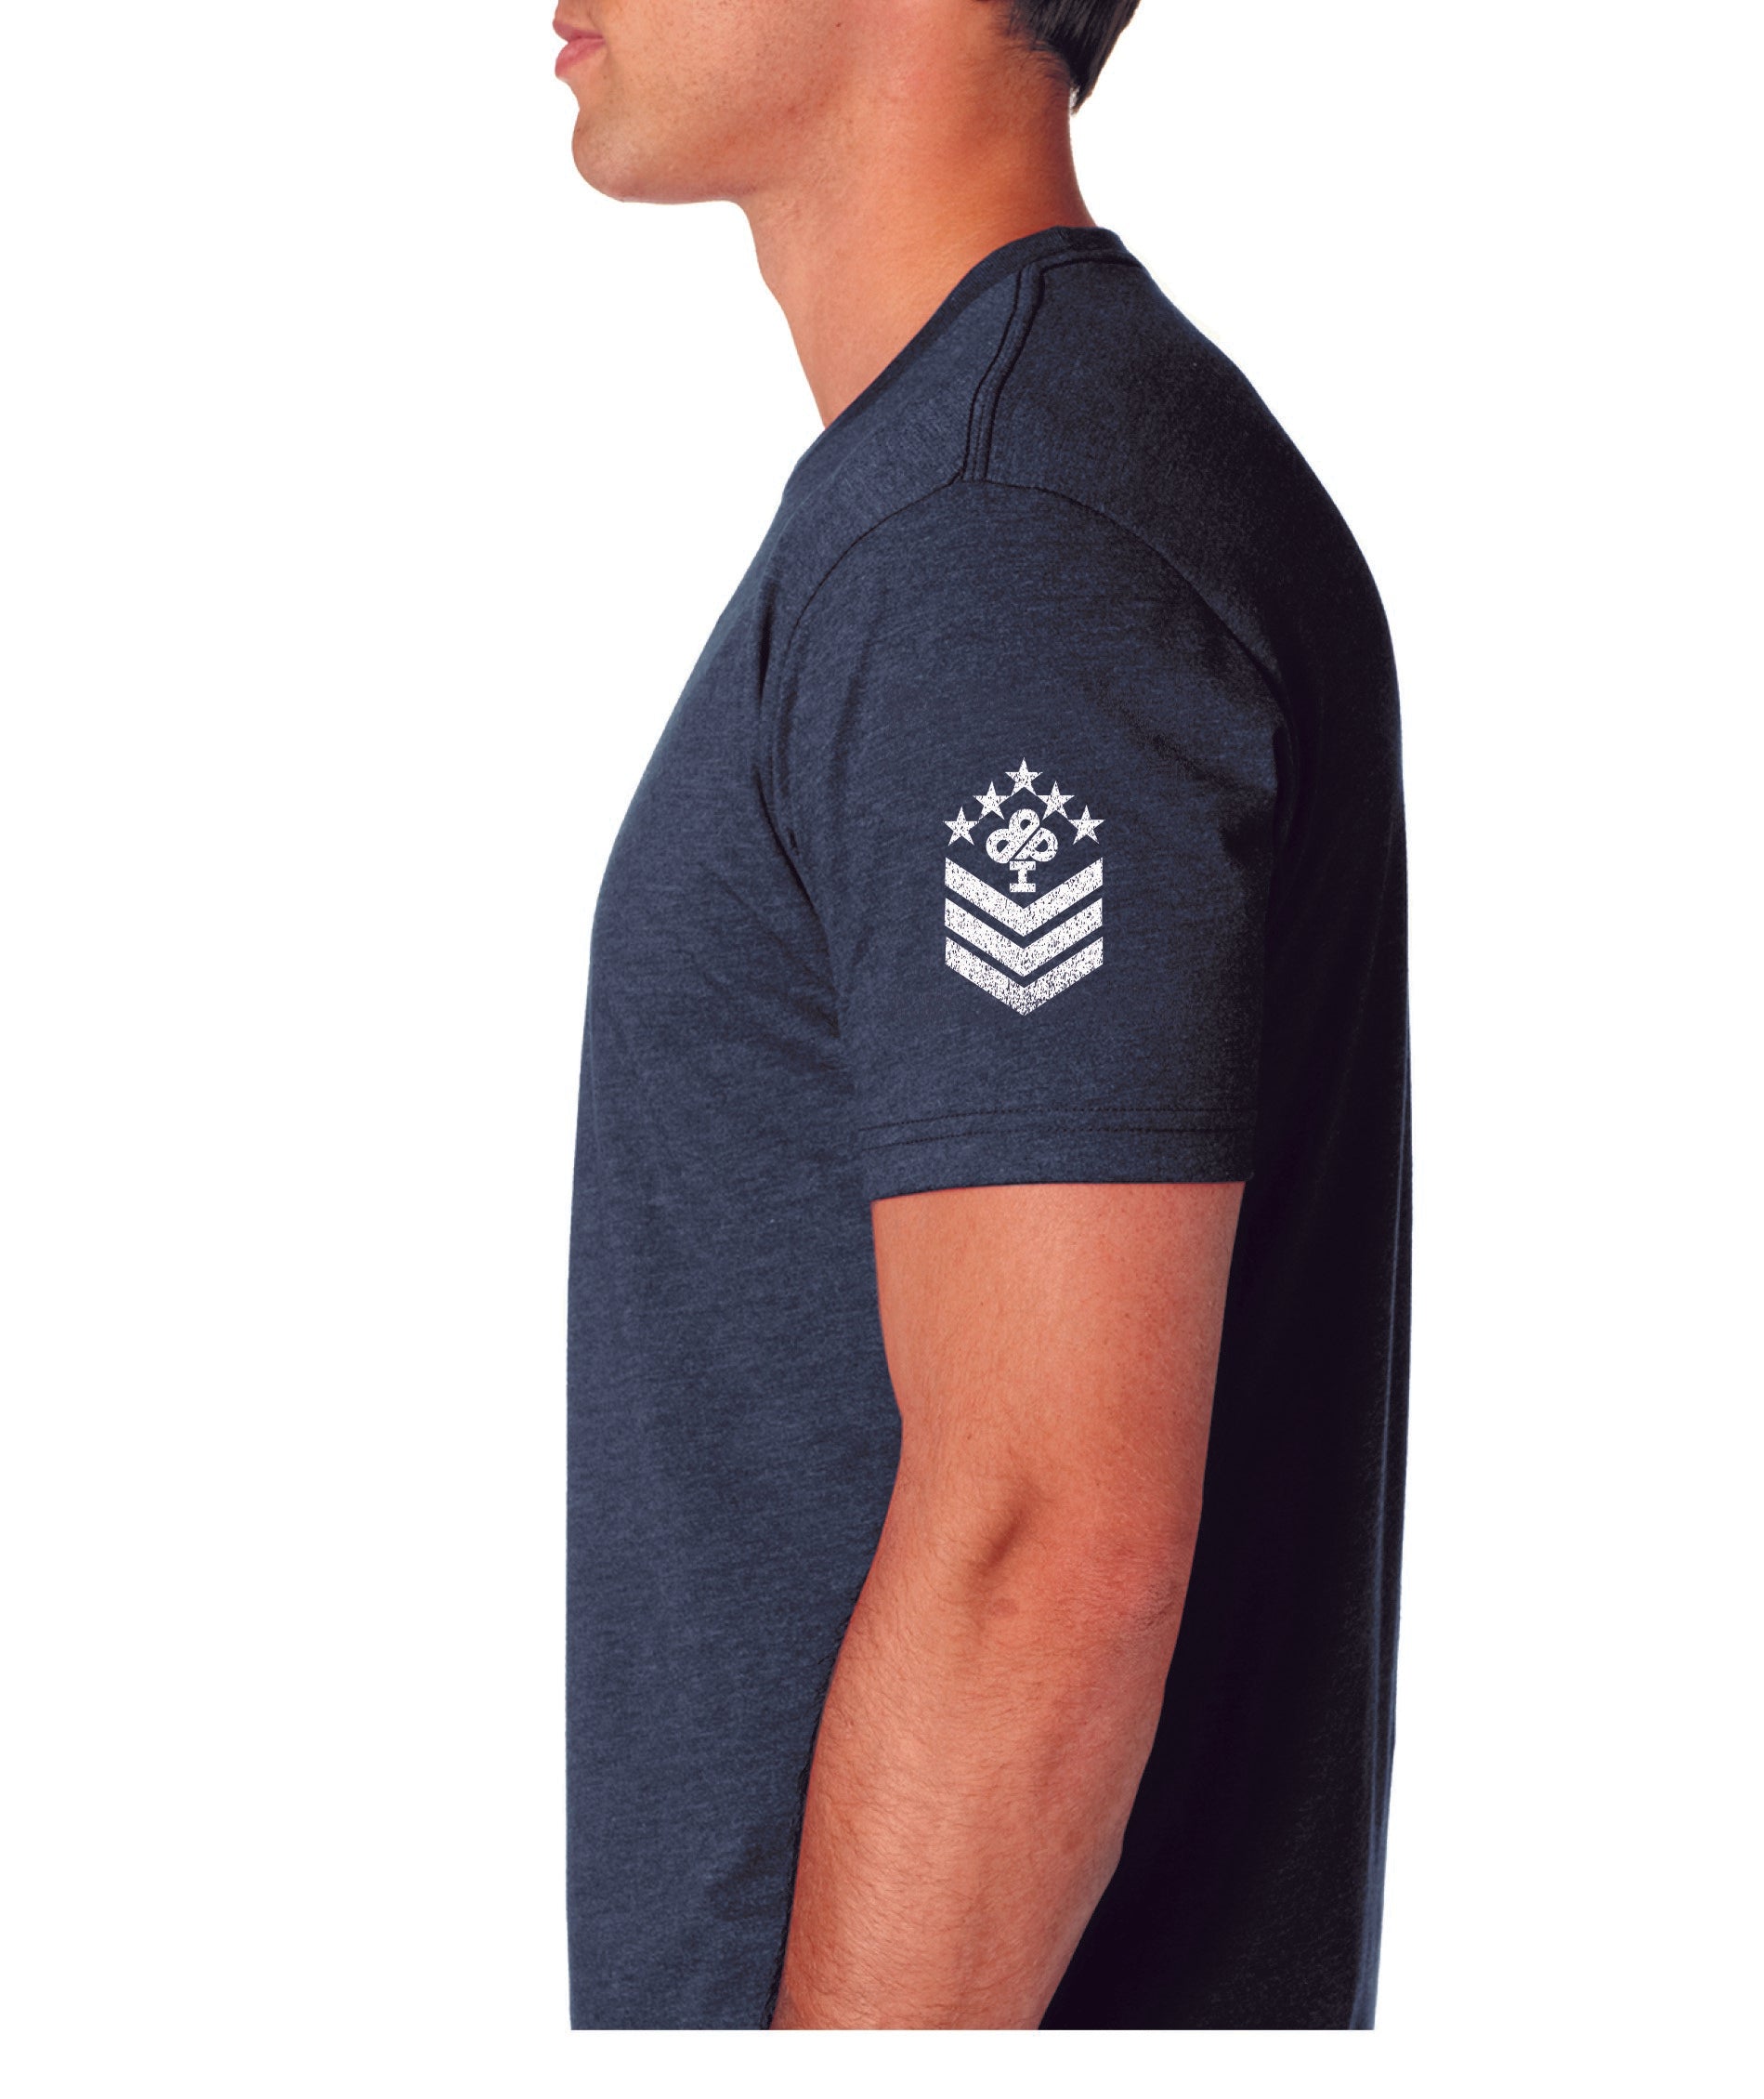 Shoulder sleeve view Ireland Boys Patriotic Military Style Logo shirt